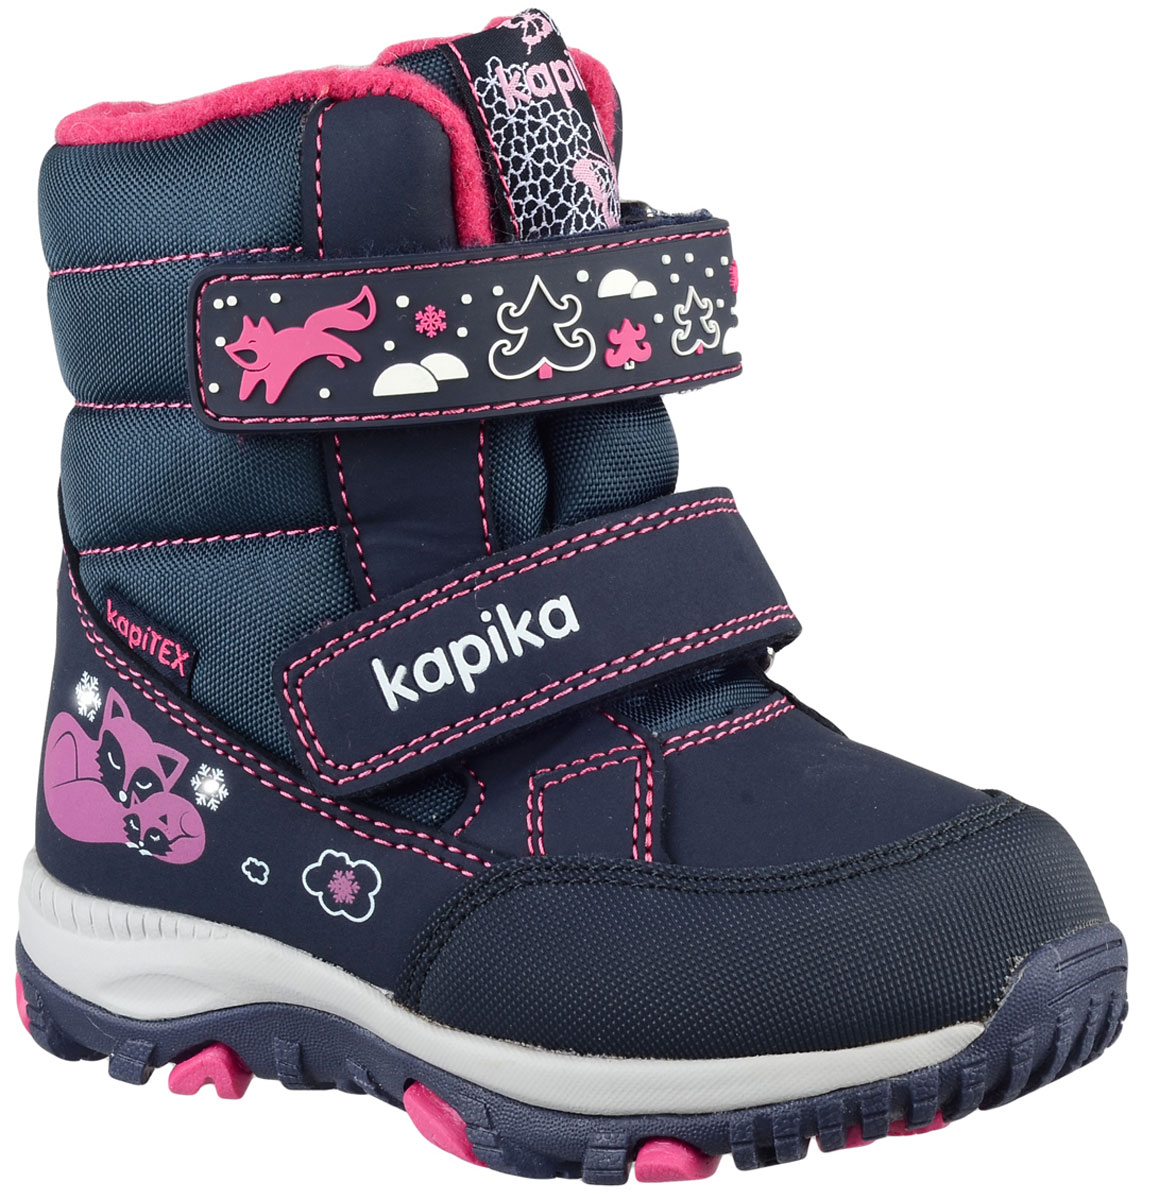 Ботинки для девочки Kapika, цвет: темно-синий, фуксия. 41220-1. Размер 25